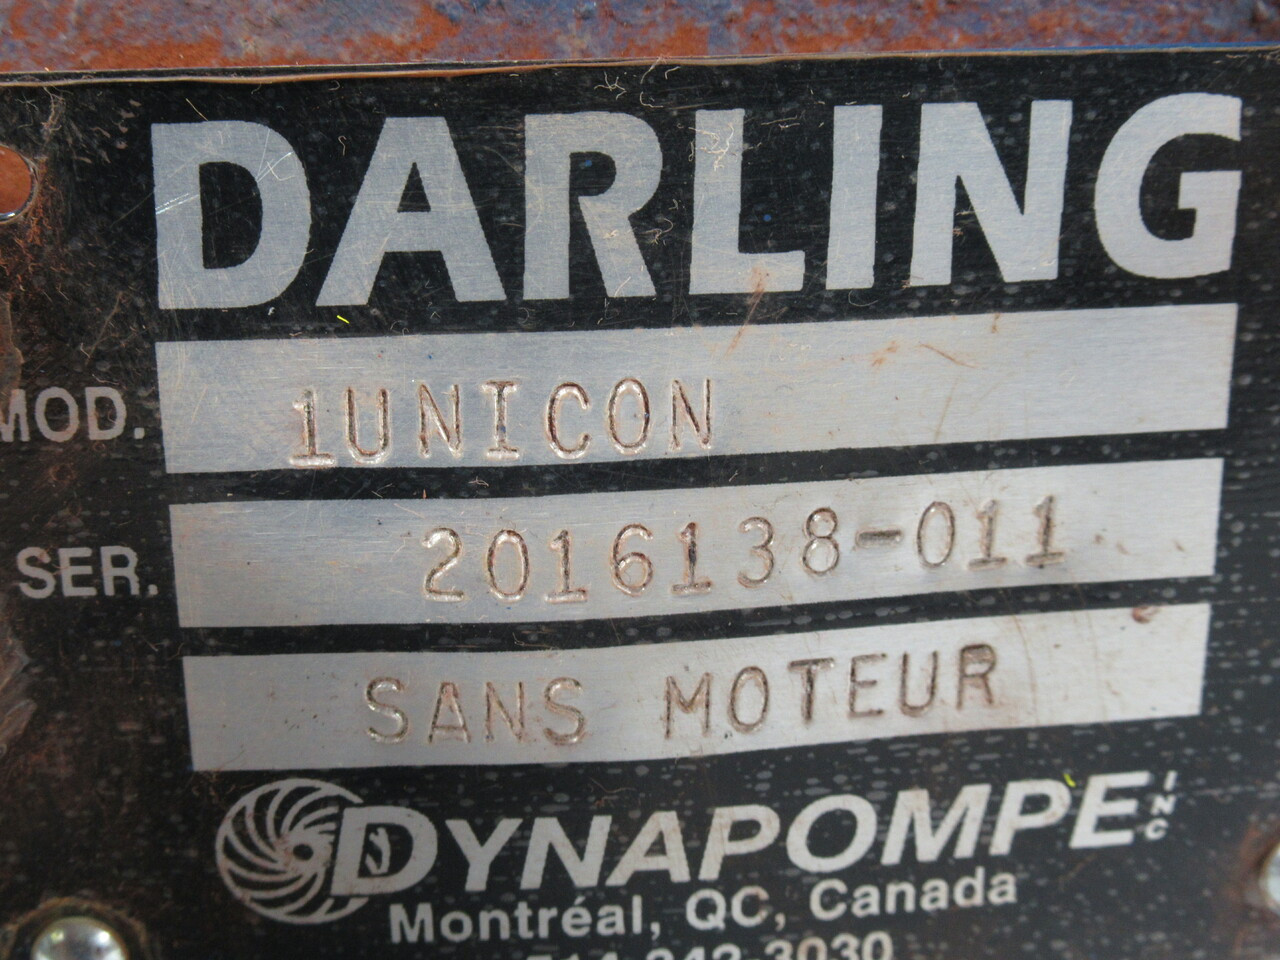 Darling 1UNICON Pump Accessory USED